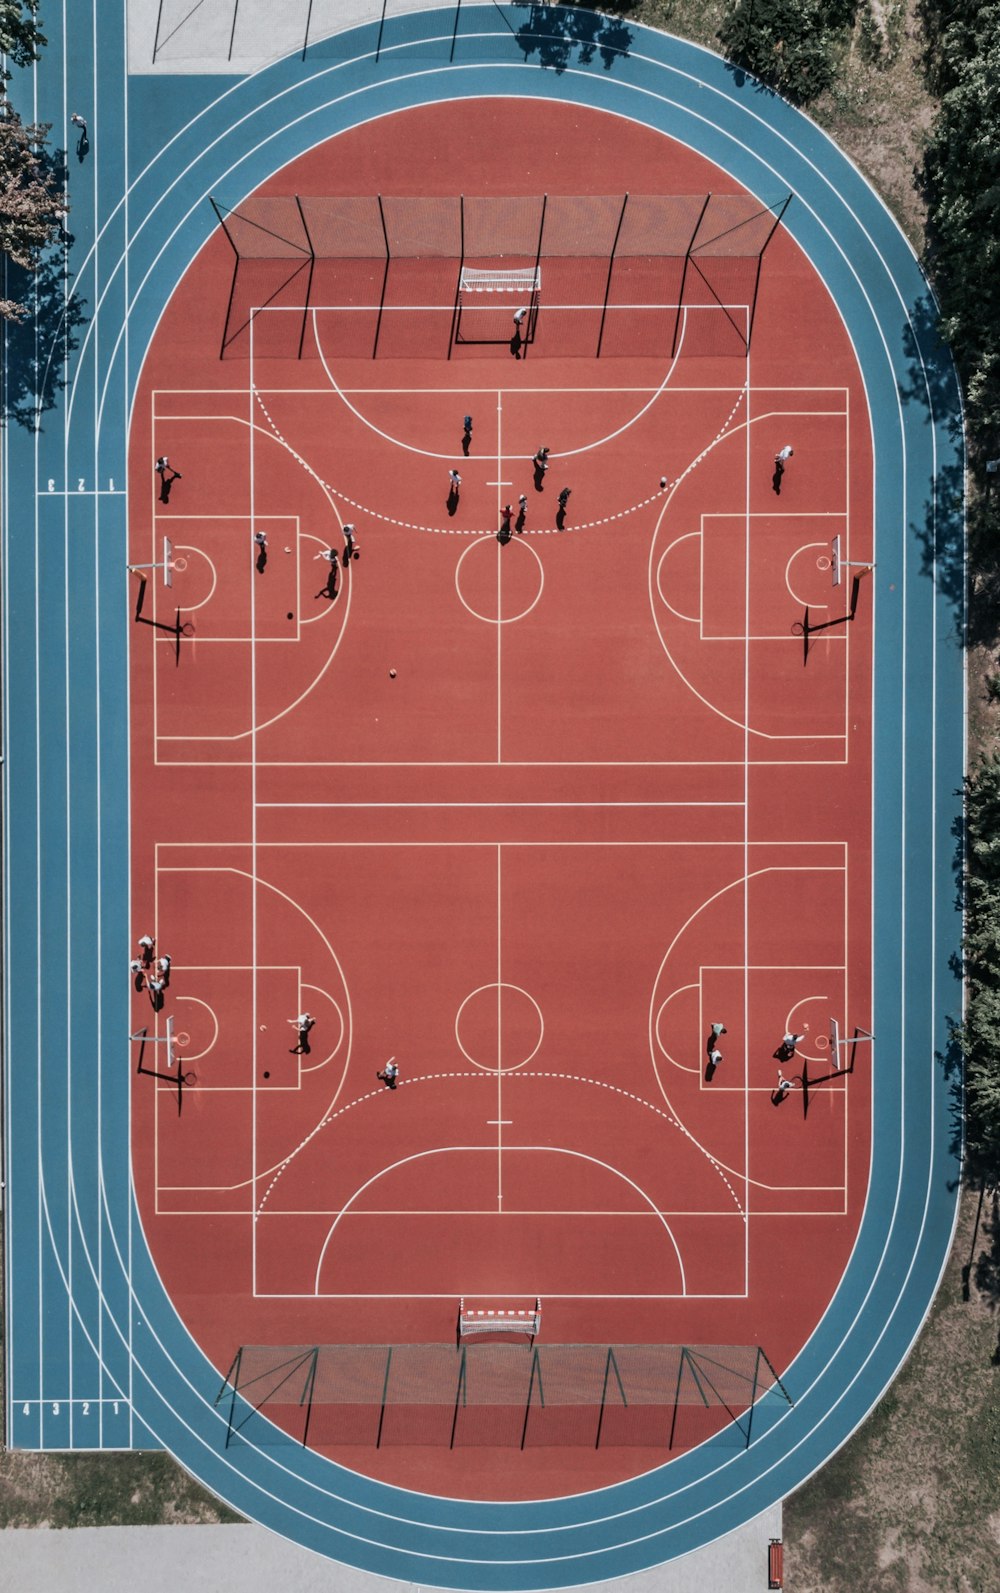 Foto aérea de la cancha de baloncesto